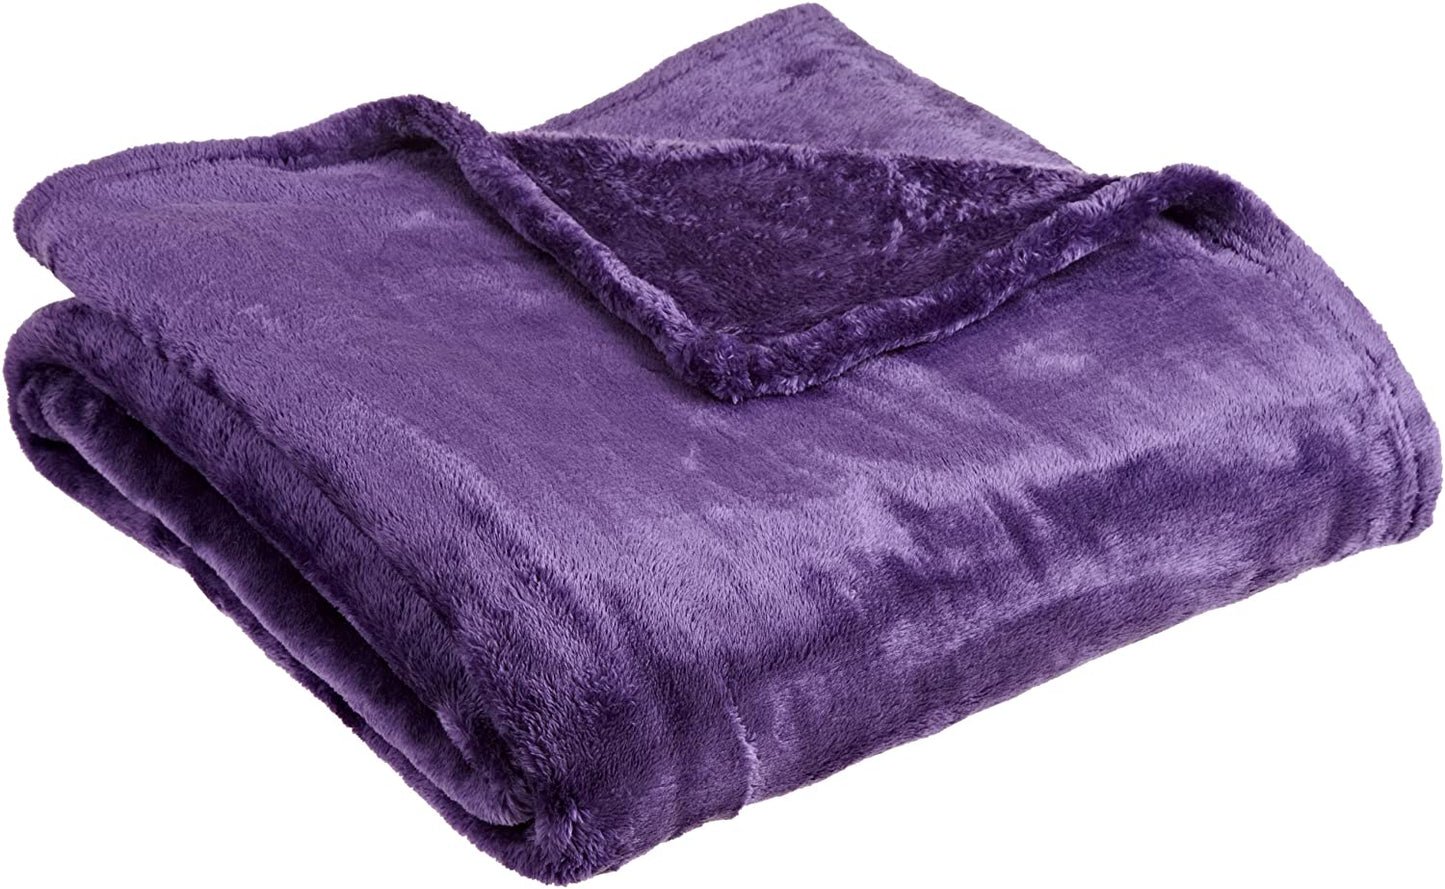 Thesis Cashmere Plush Throw - Purple